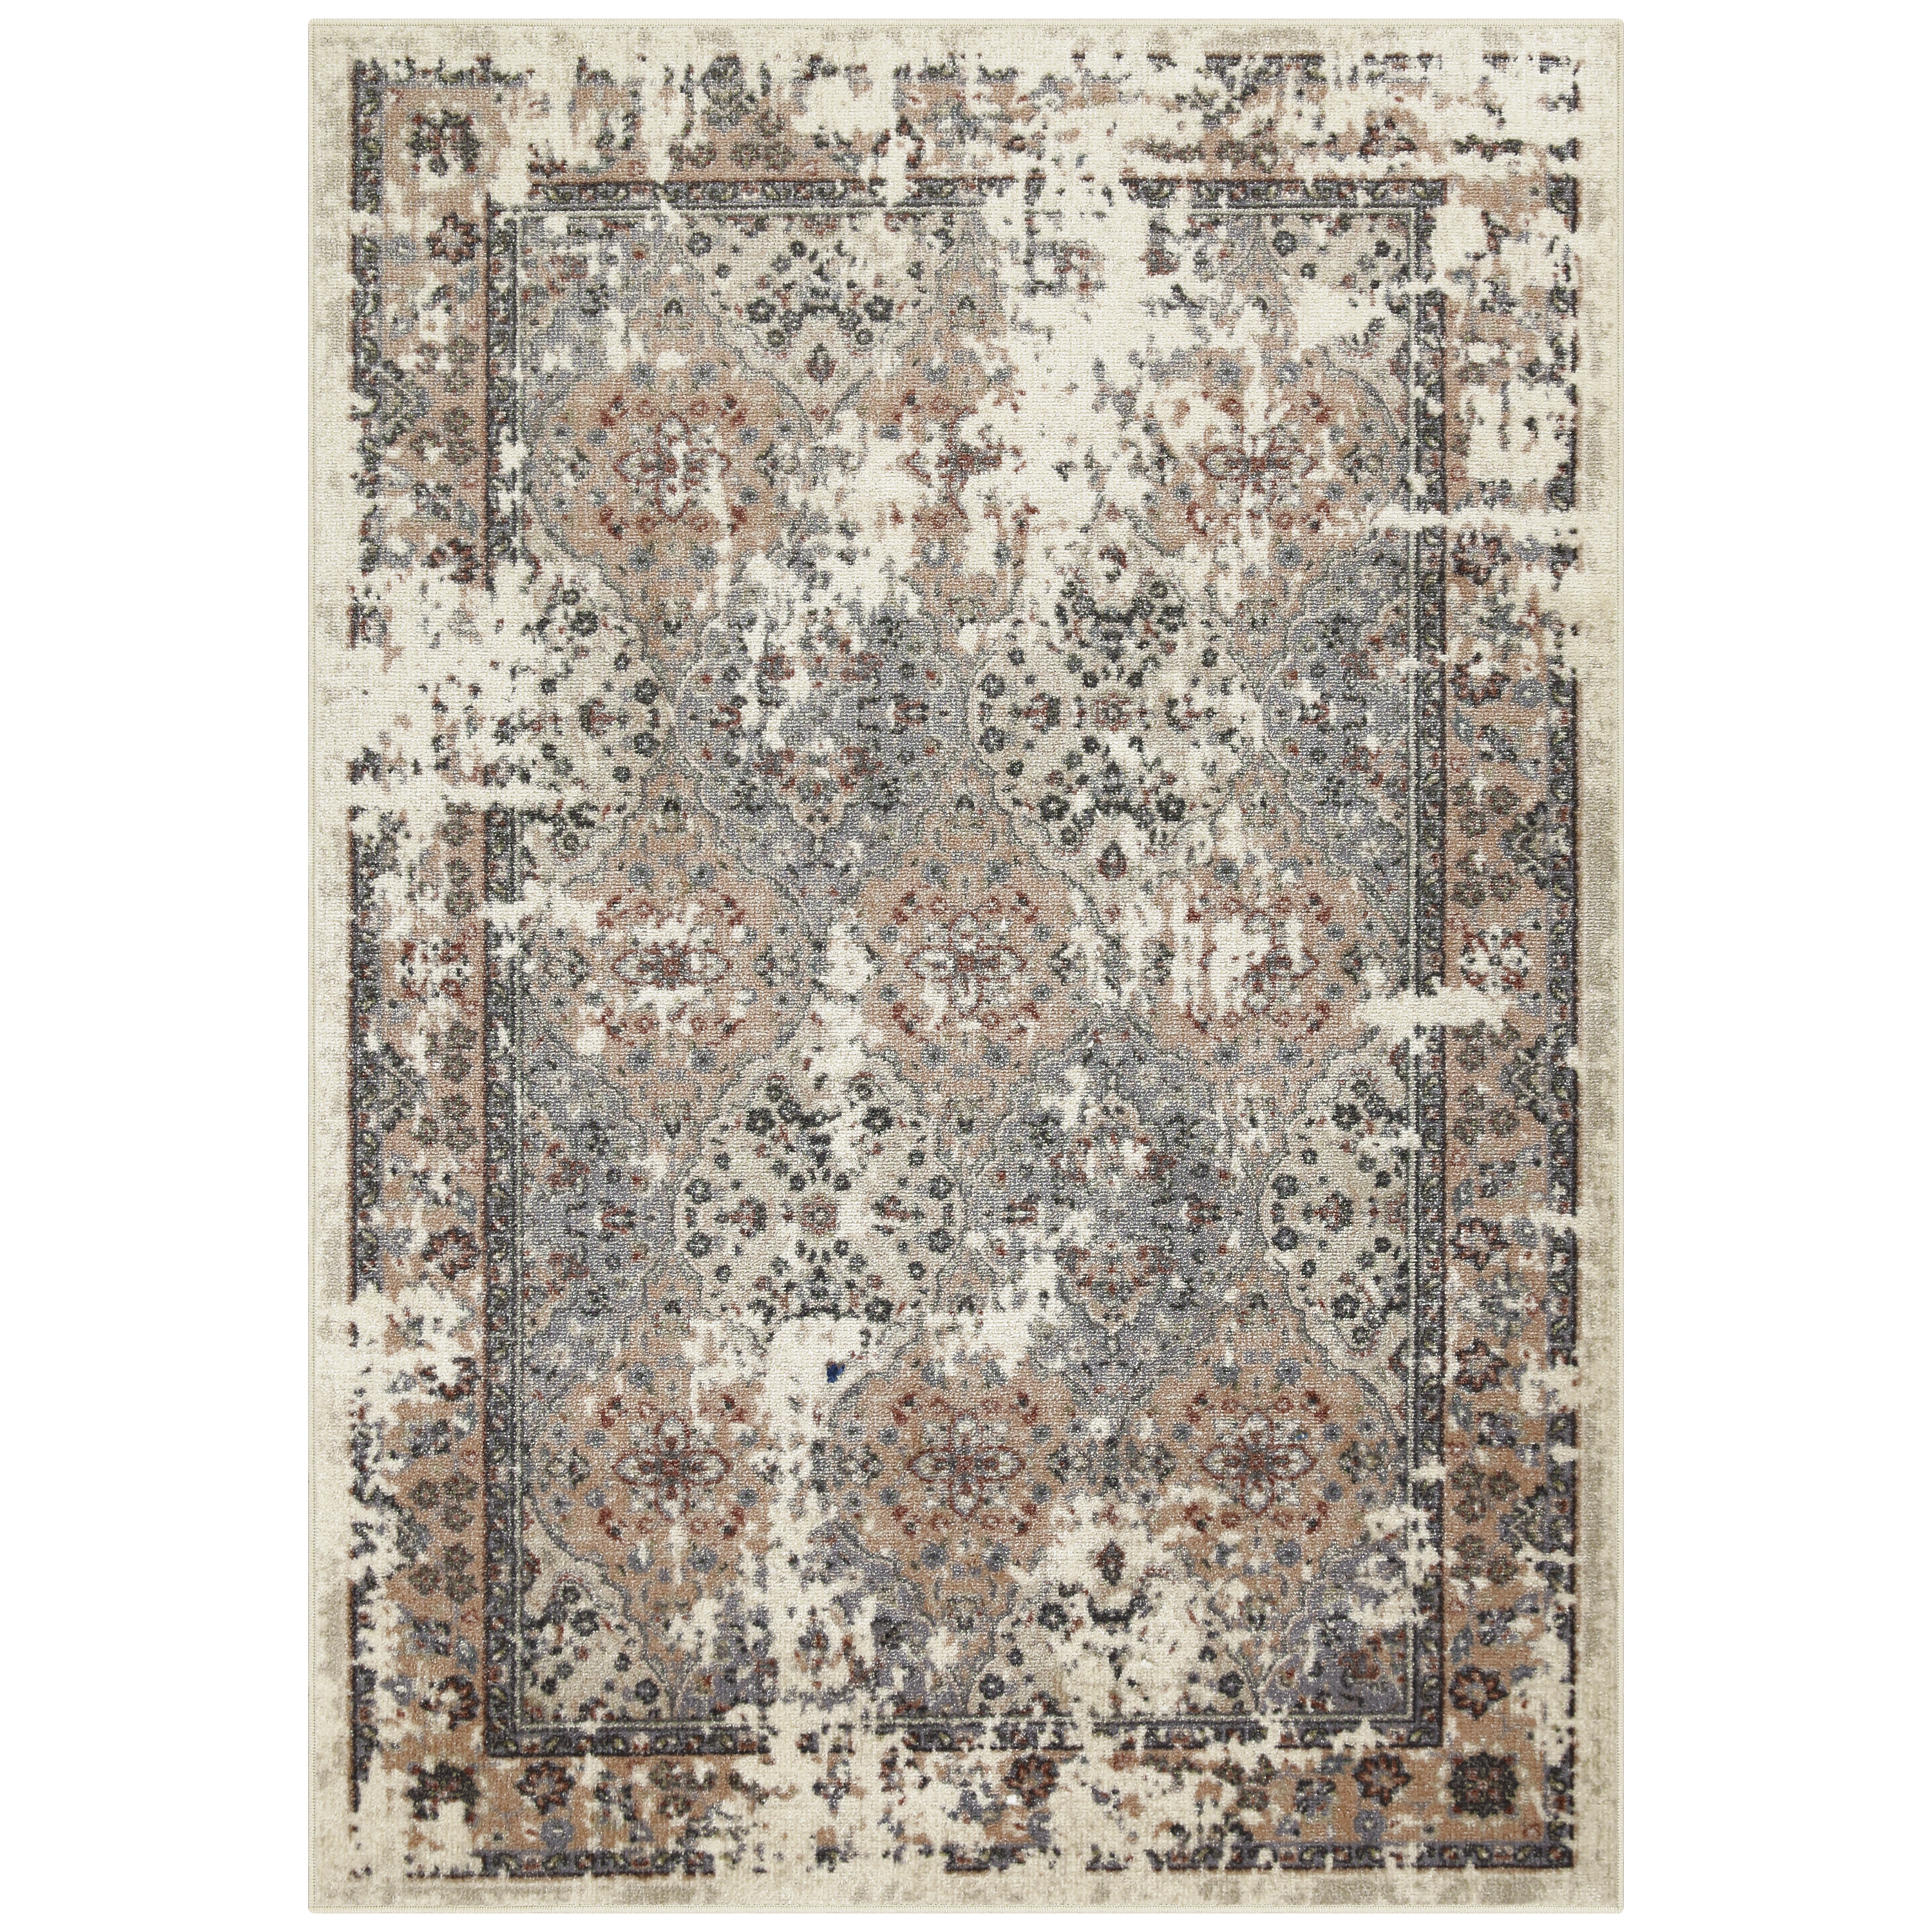 Carpet rug rugs | walmart.com ZOXUHXO